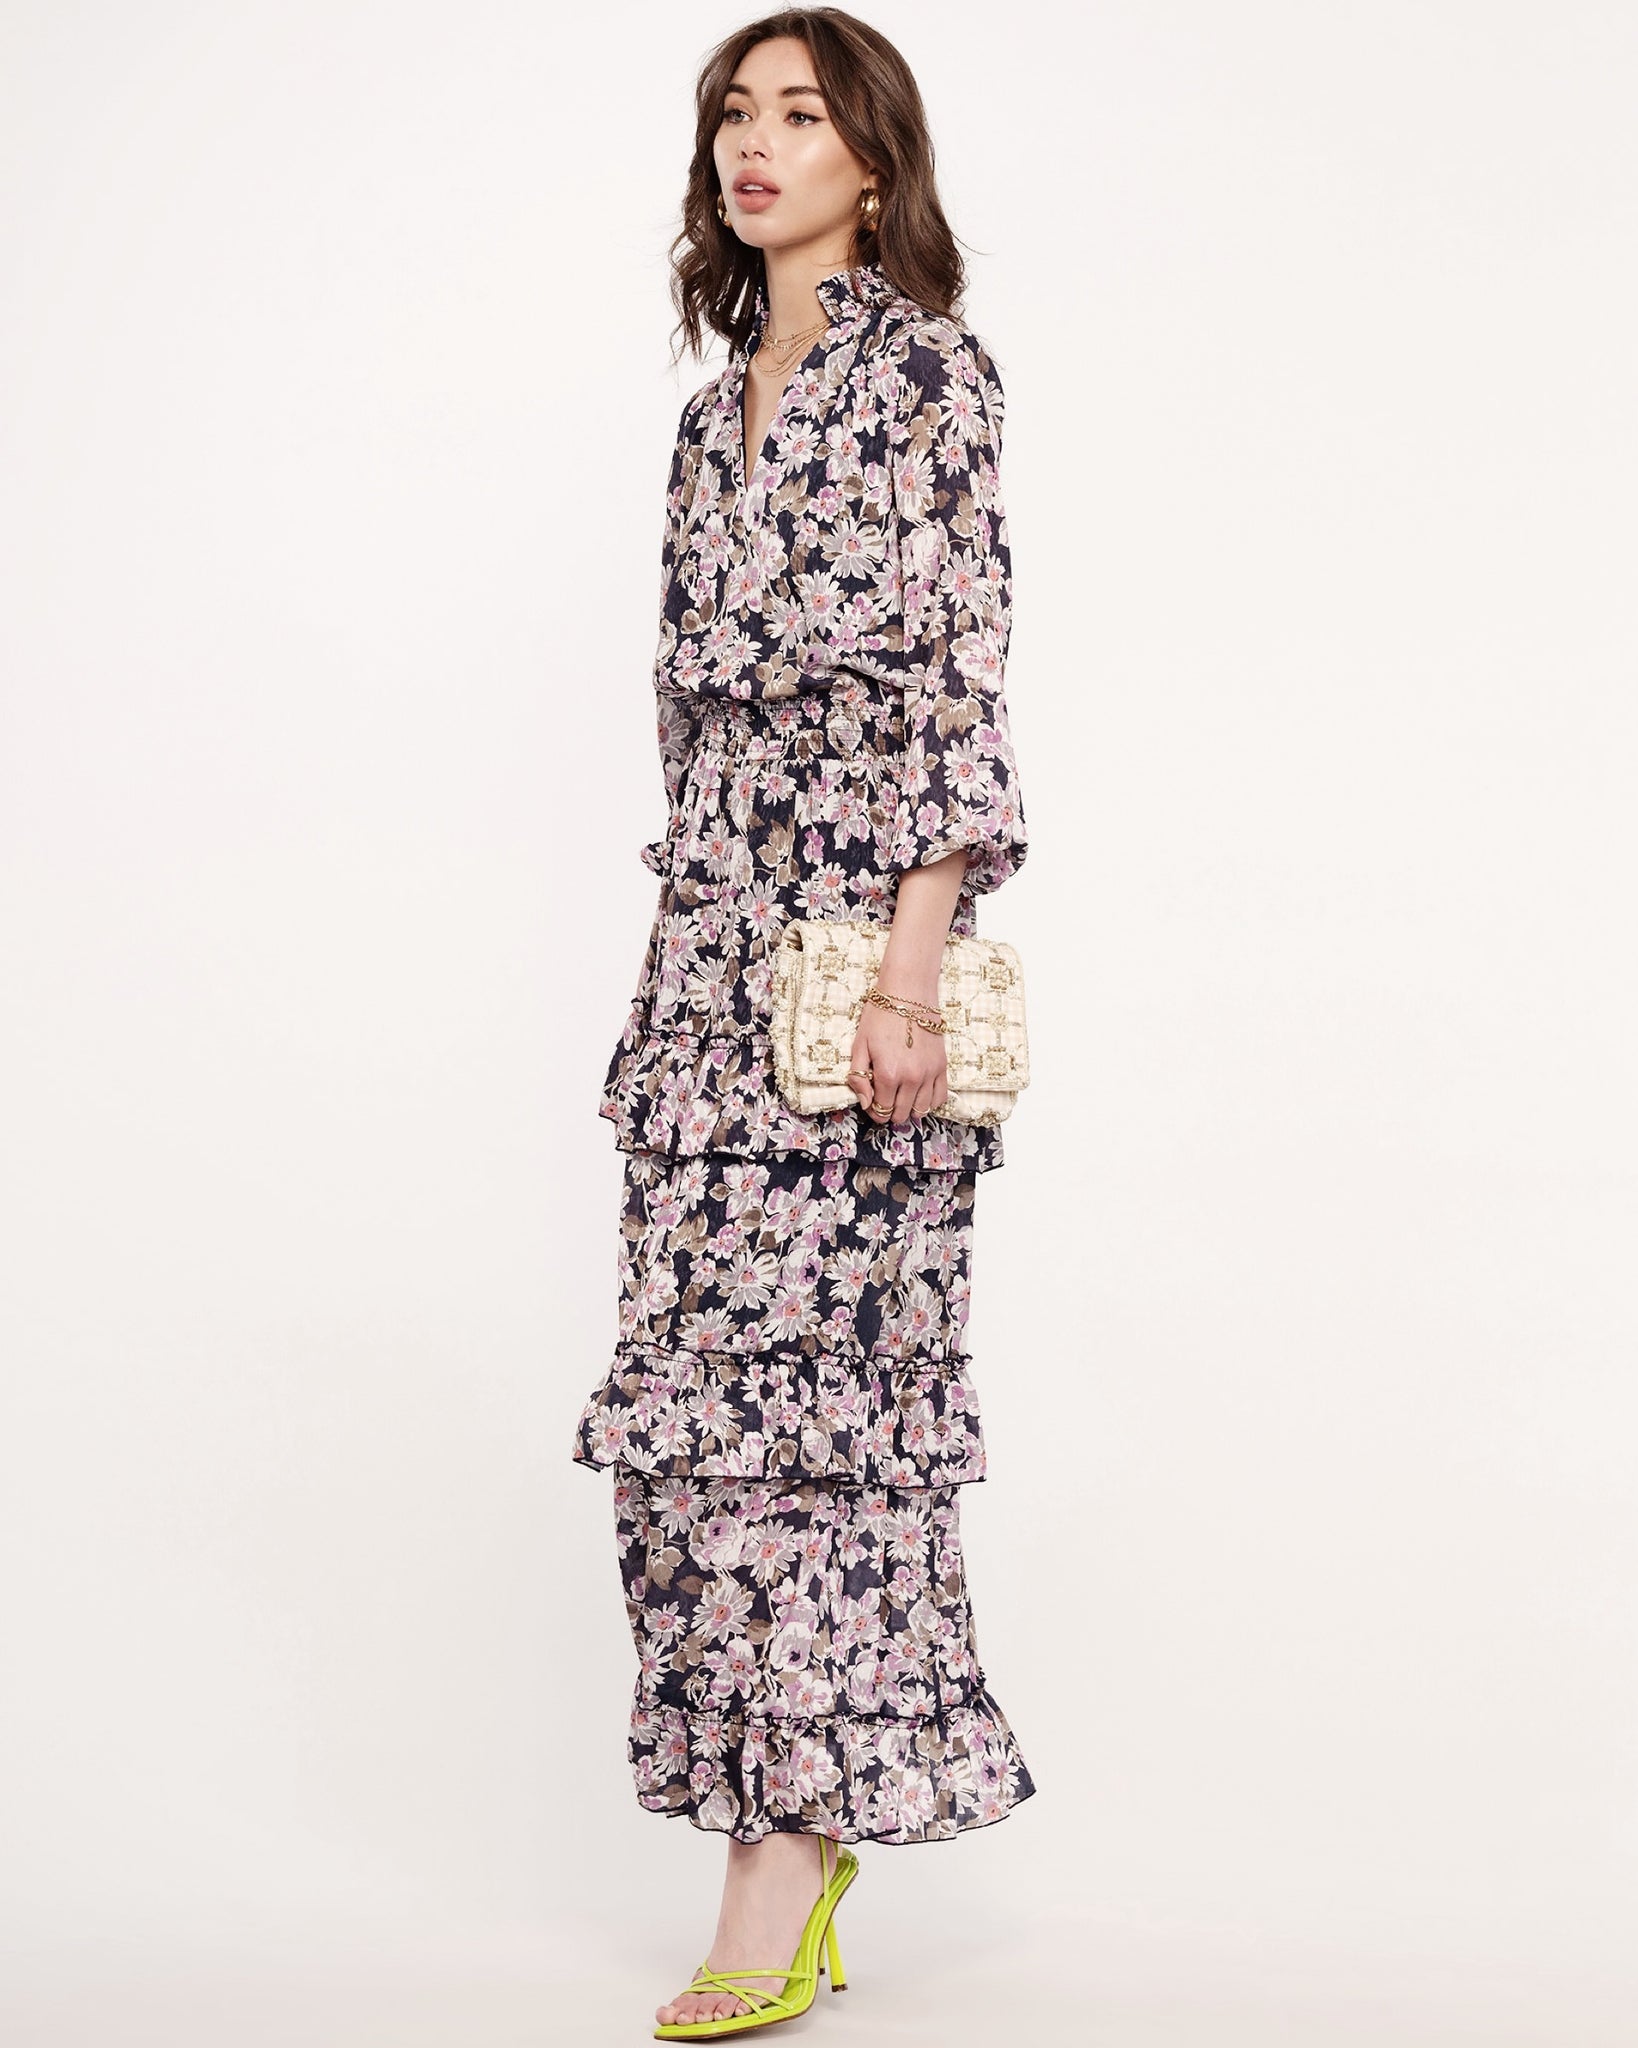 leyla floral ruffle dress